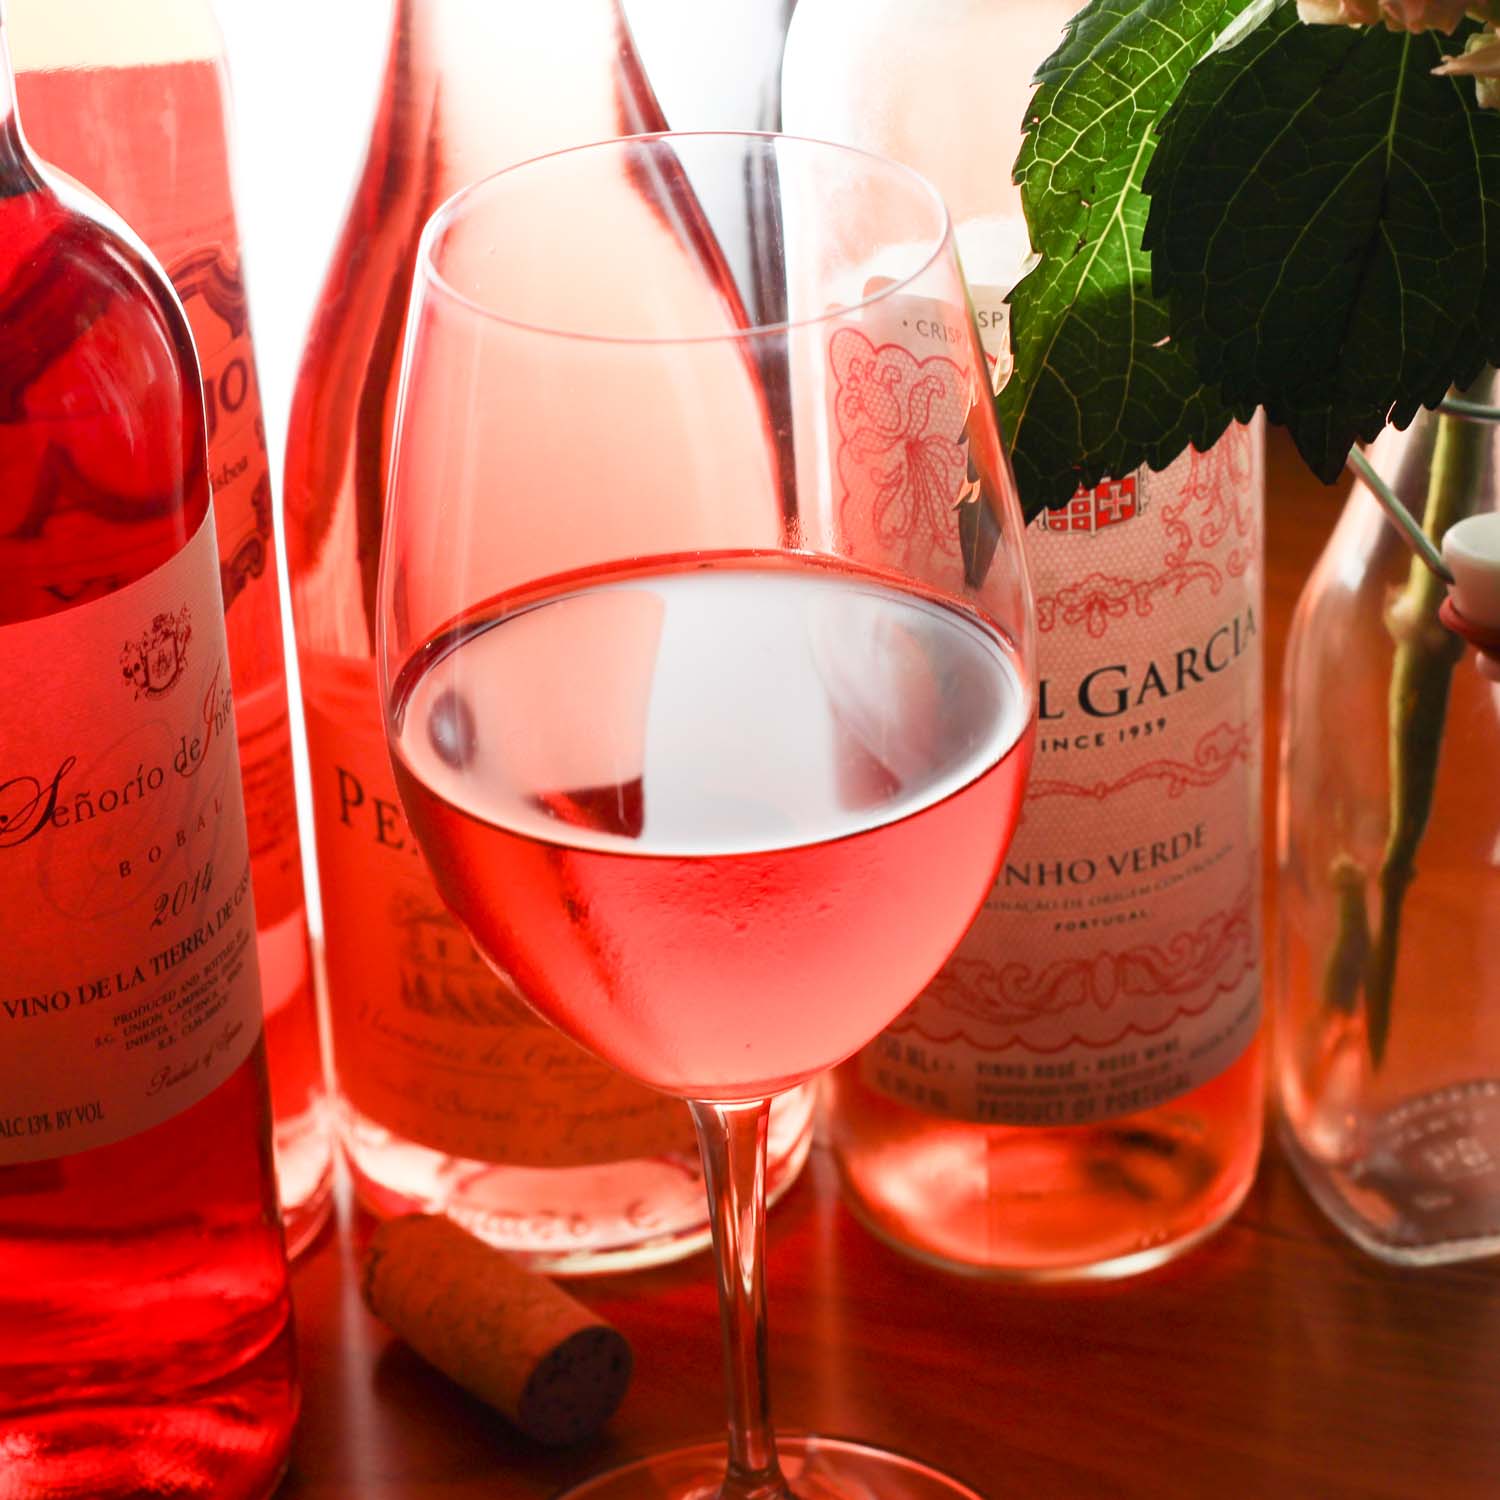 5 Great Rosé Wines Under $10 platingsandpairings.com